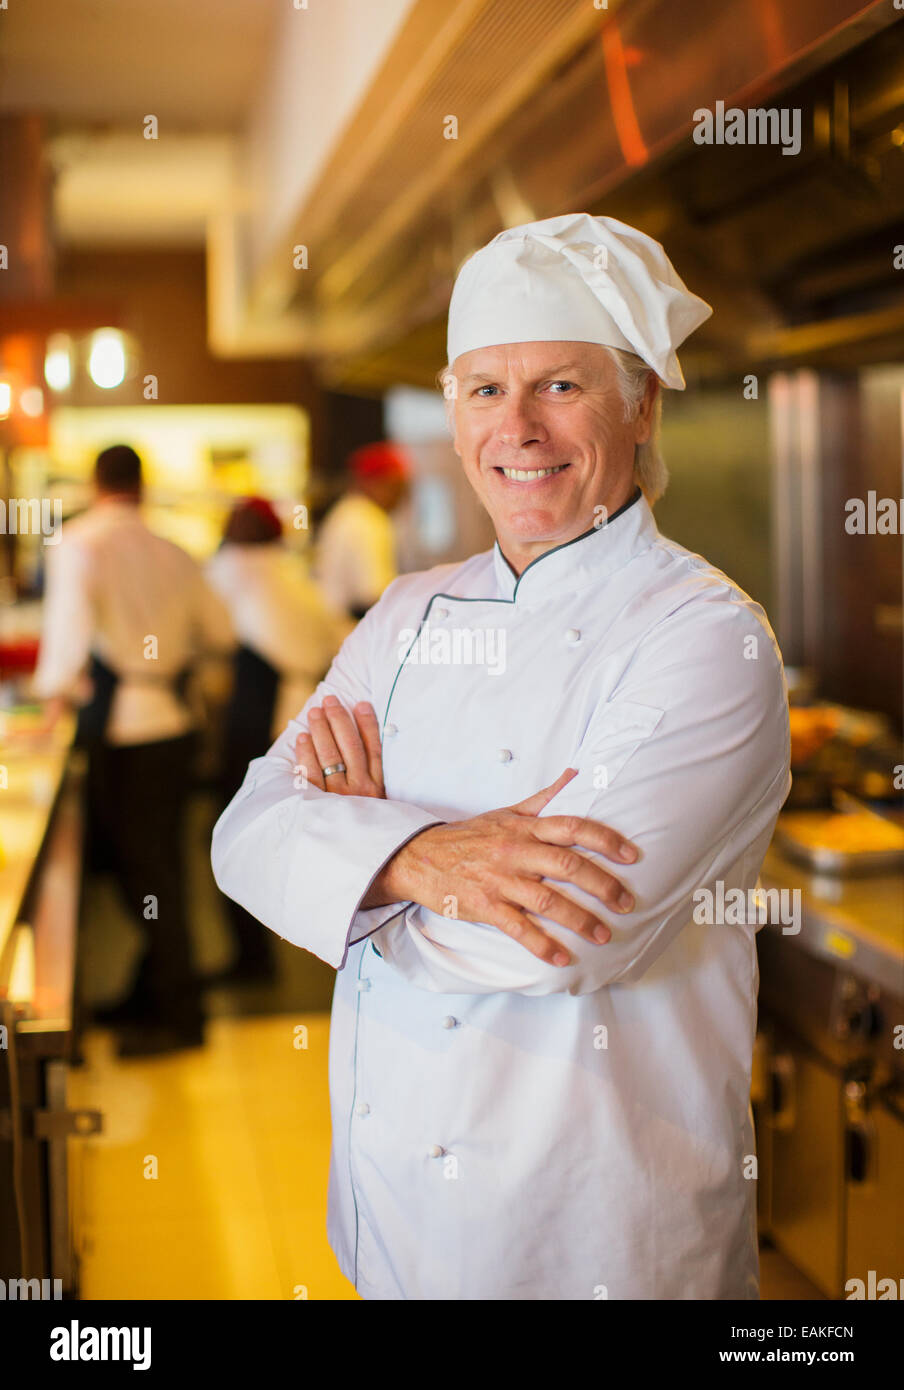 Portrait of smiling chef in restaurant kitchen Stock Photo